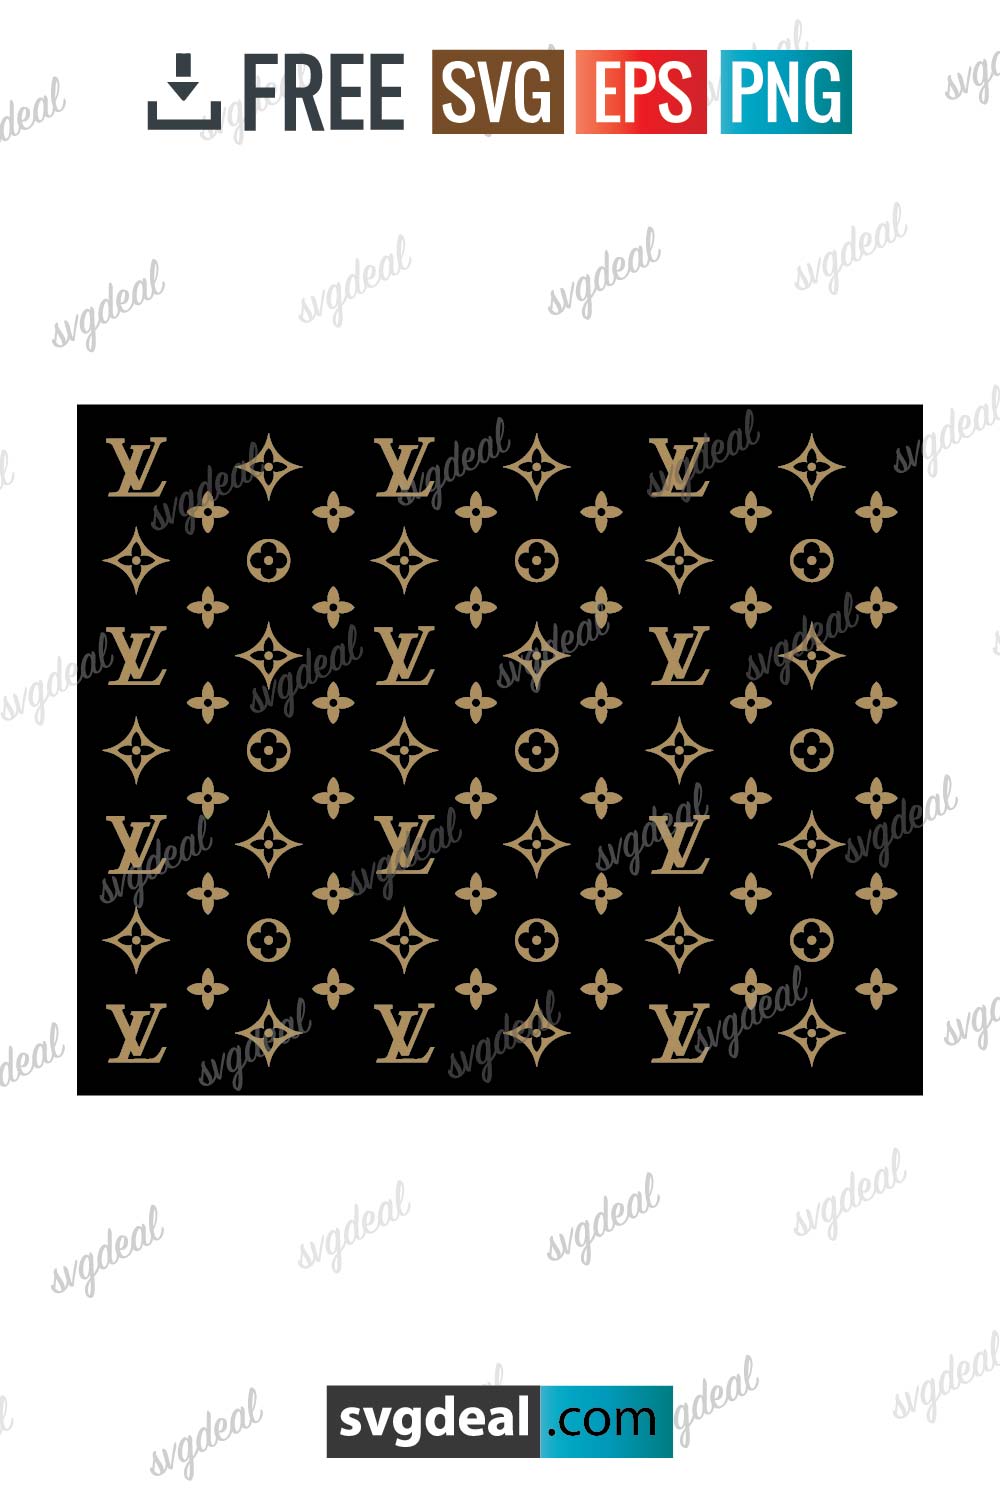 Louis Vuitton Pattern SVG Digital File, Louis Vuitton Svg, Lv Pattern Svg